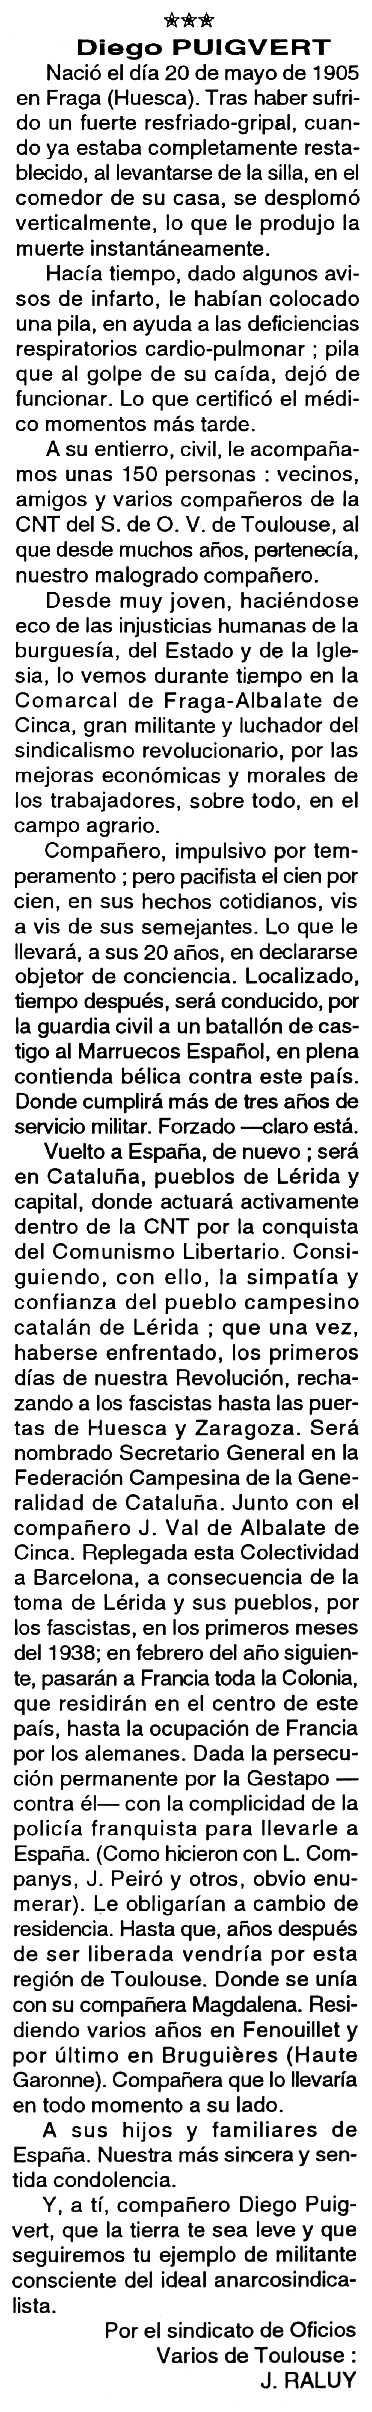 Necrològica de Diego Puigvert apareguda en el periòdic tolosà "Cenit" del 19 d'abril de 1994